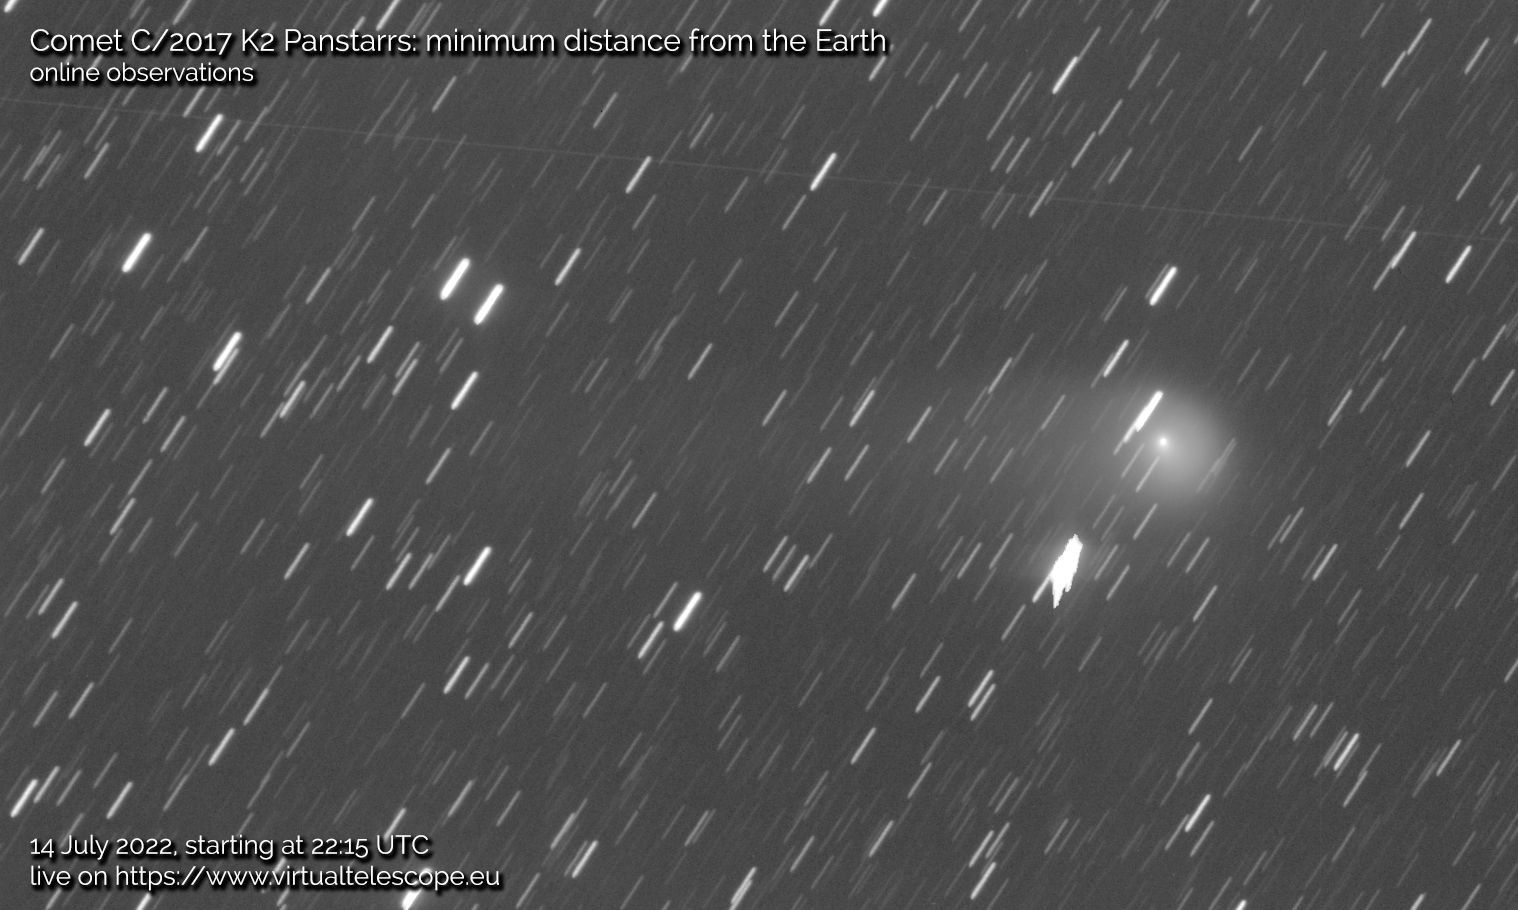 Comet C/2017 K2 Panstarrs, live observation - poster of the event.